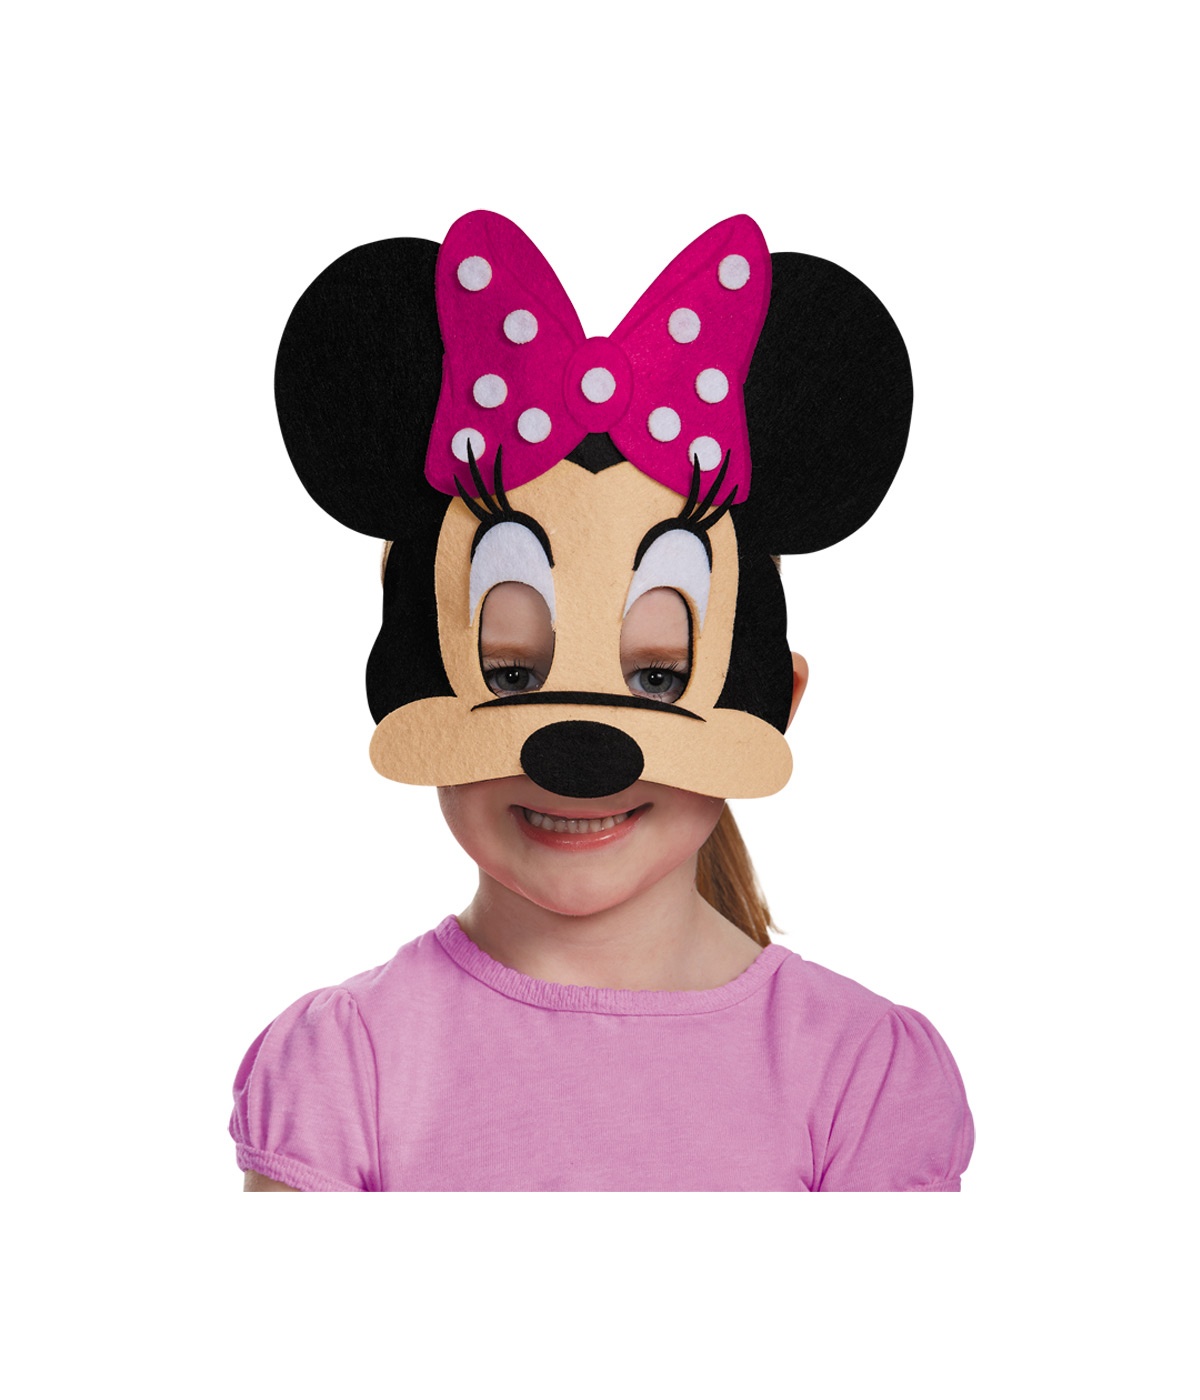  Minnie Mouse Pink Felt Mask